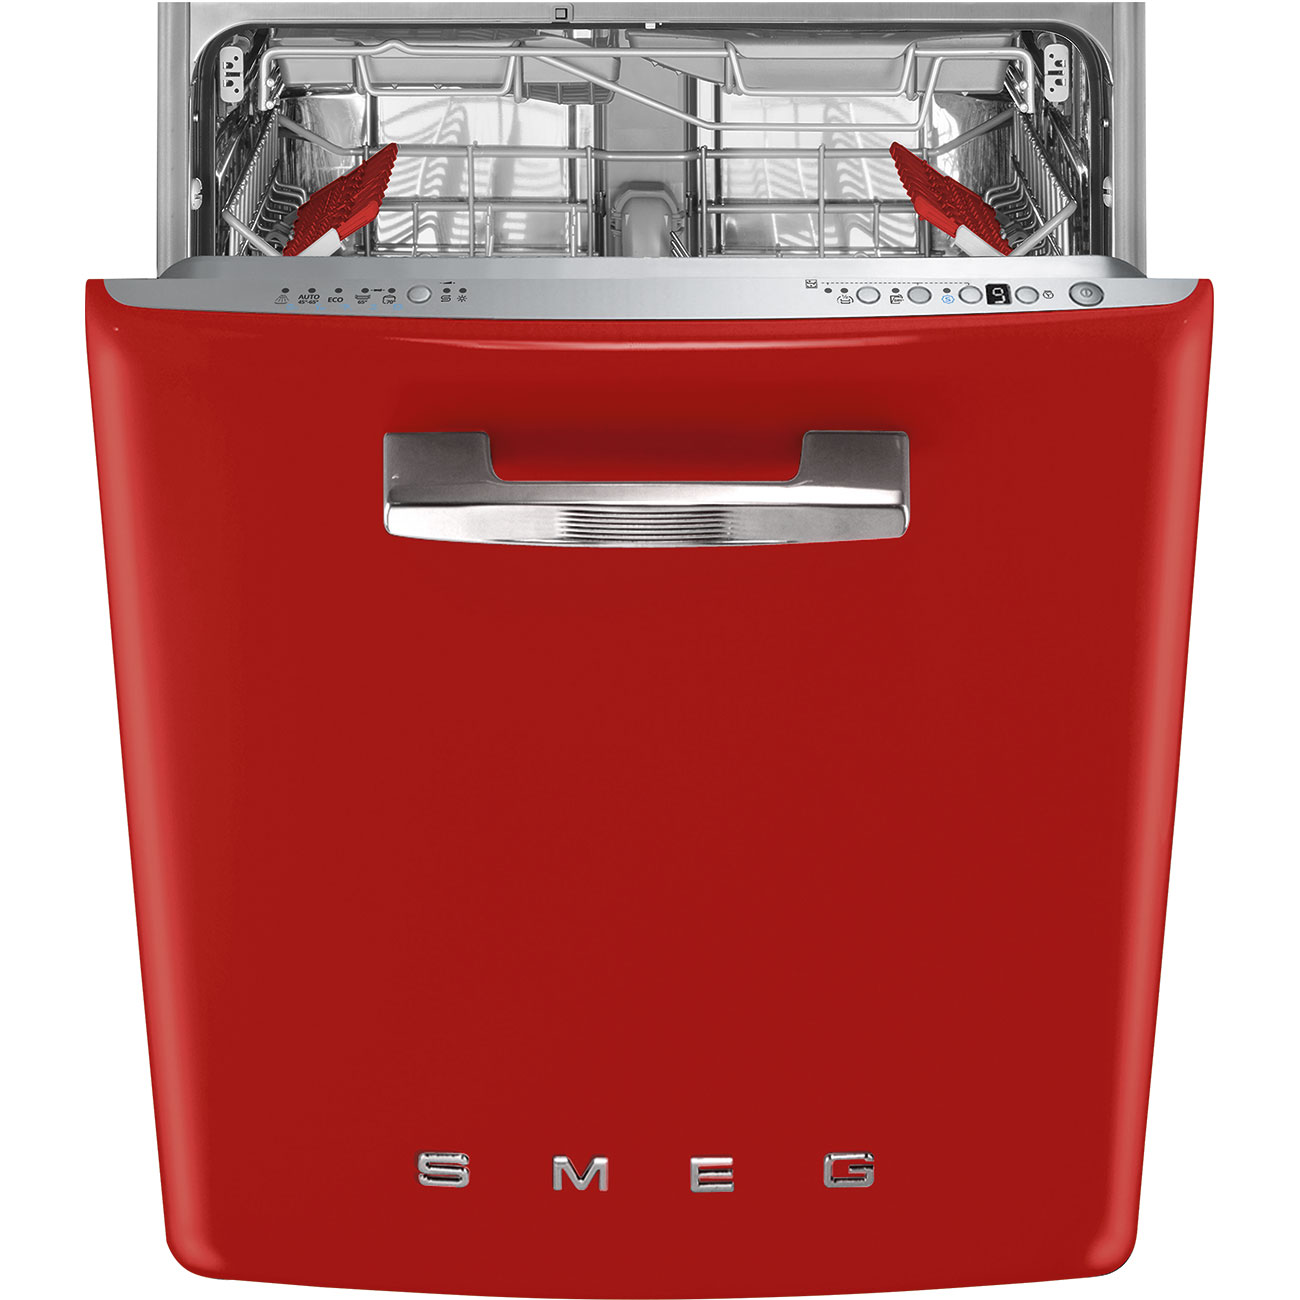 Under counter built-in dishwasher 60 cm Smeg_1